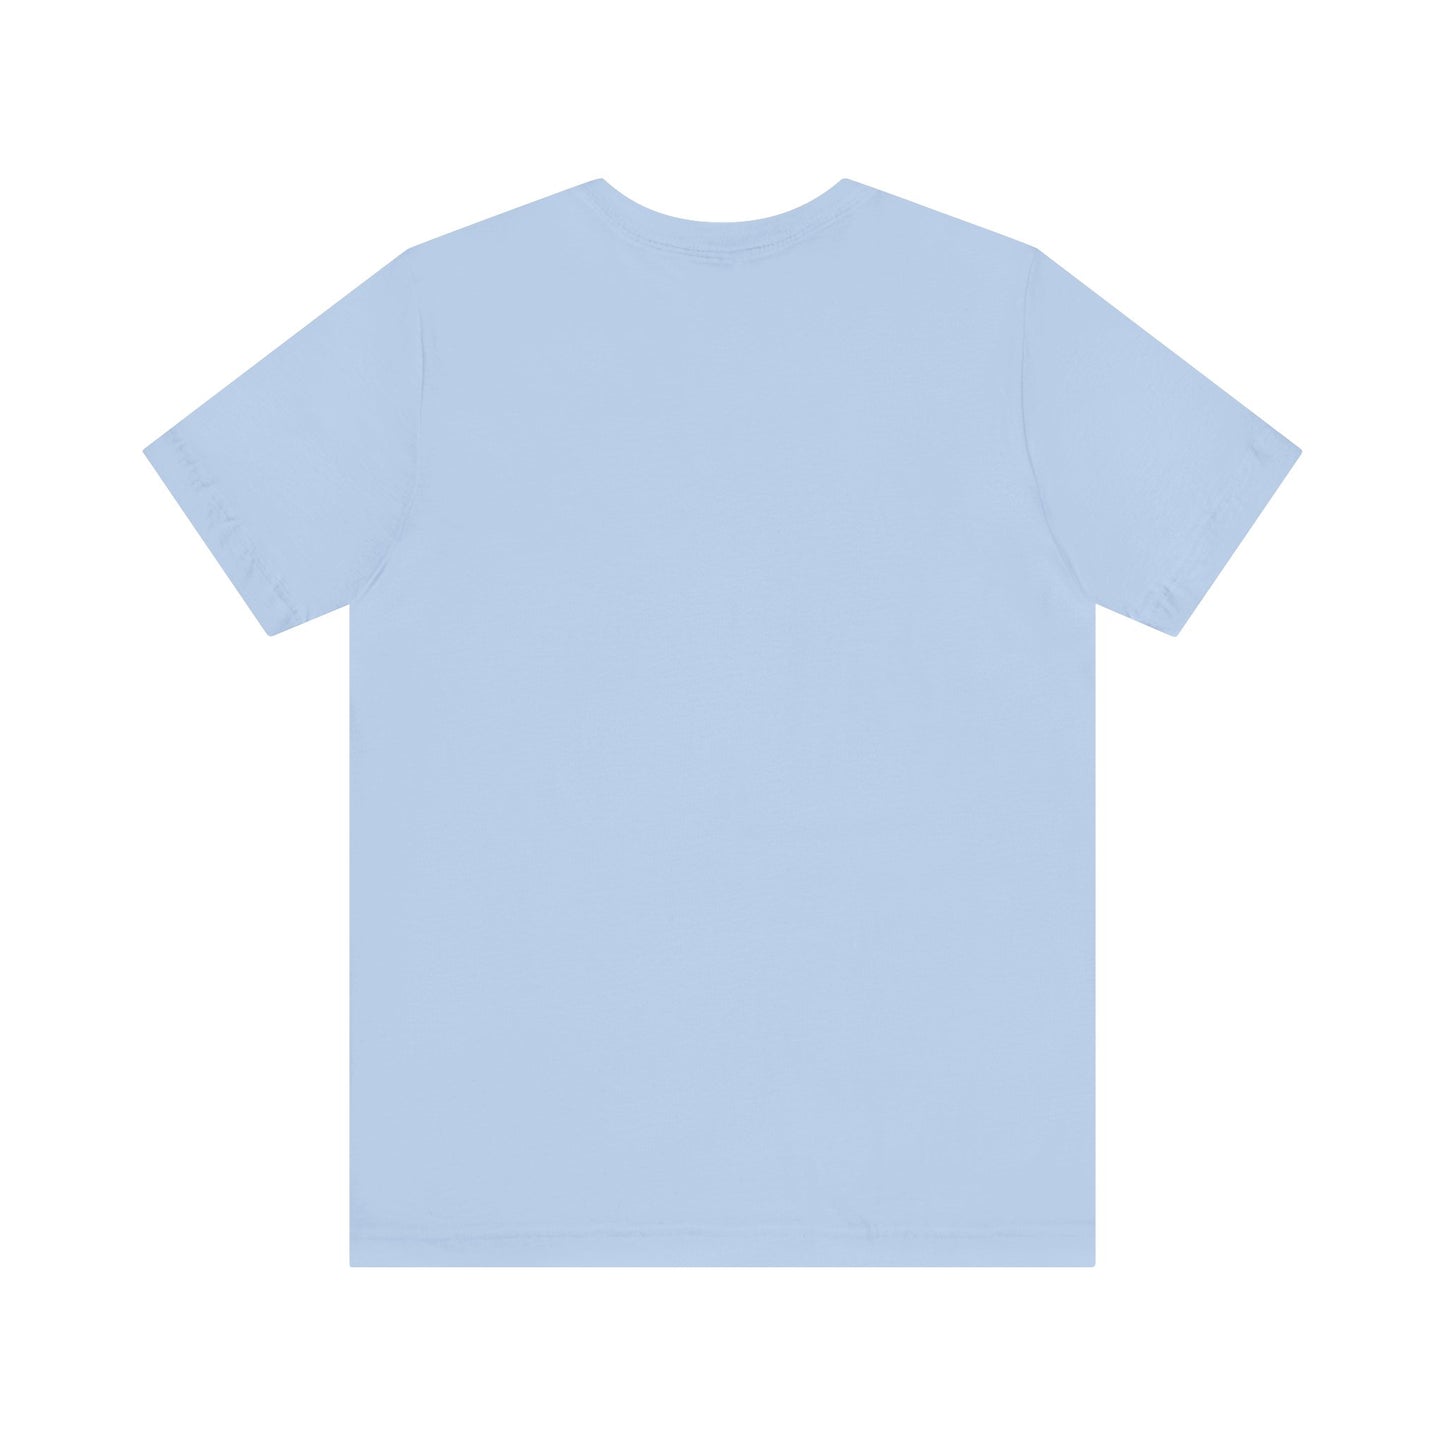 Capitol A's (single small logo) Unisex Jersey Short Sleeve Tee